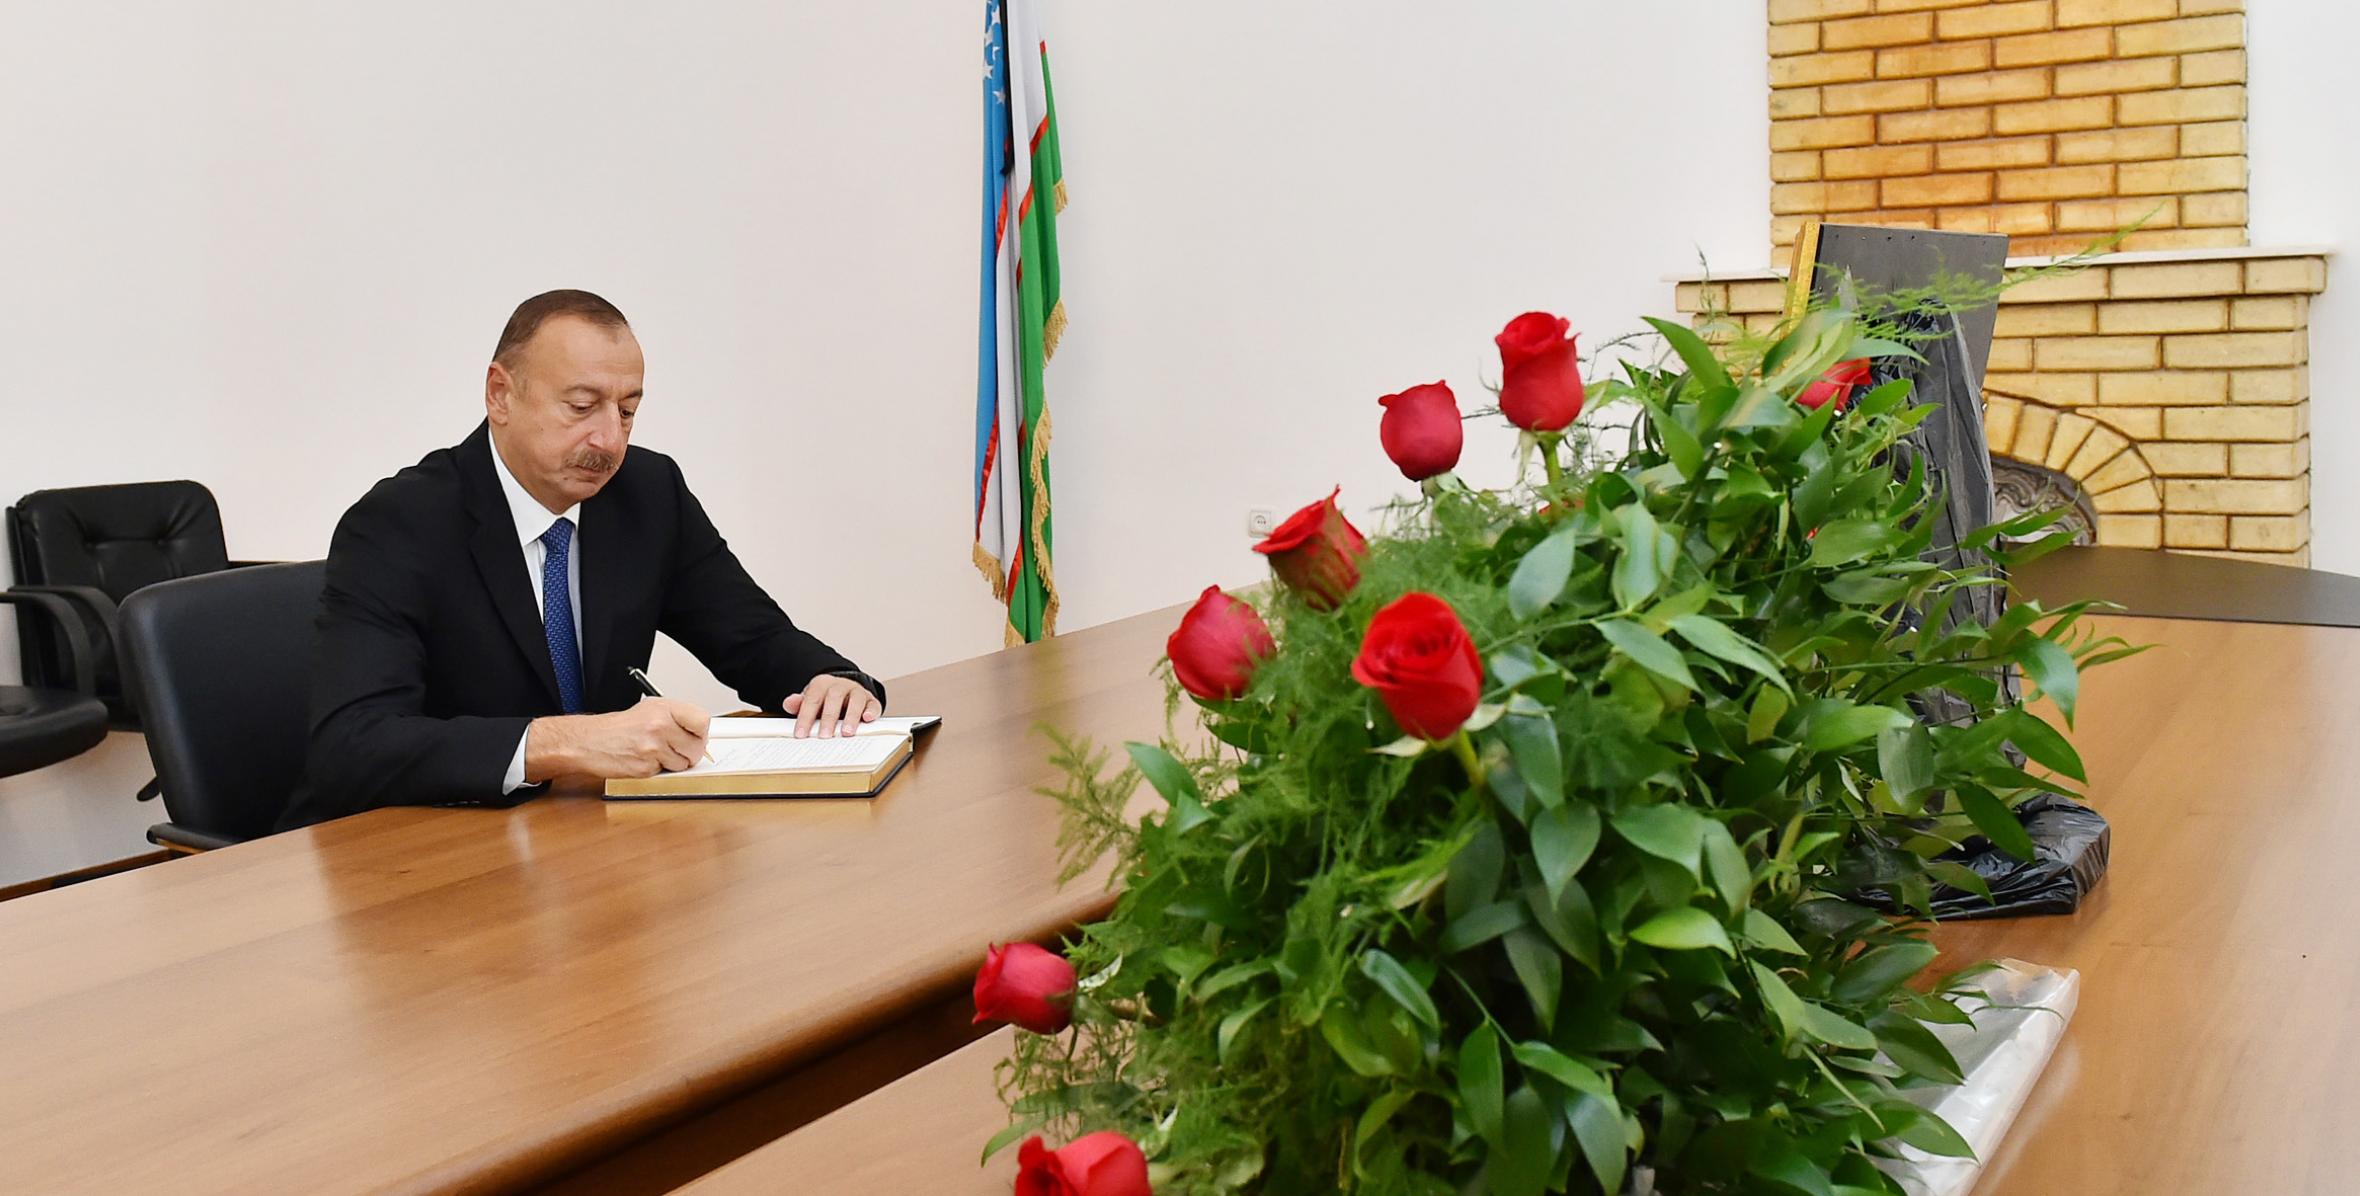 Ilham Aliyev visited Embassy of Uzbekistan